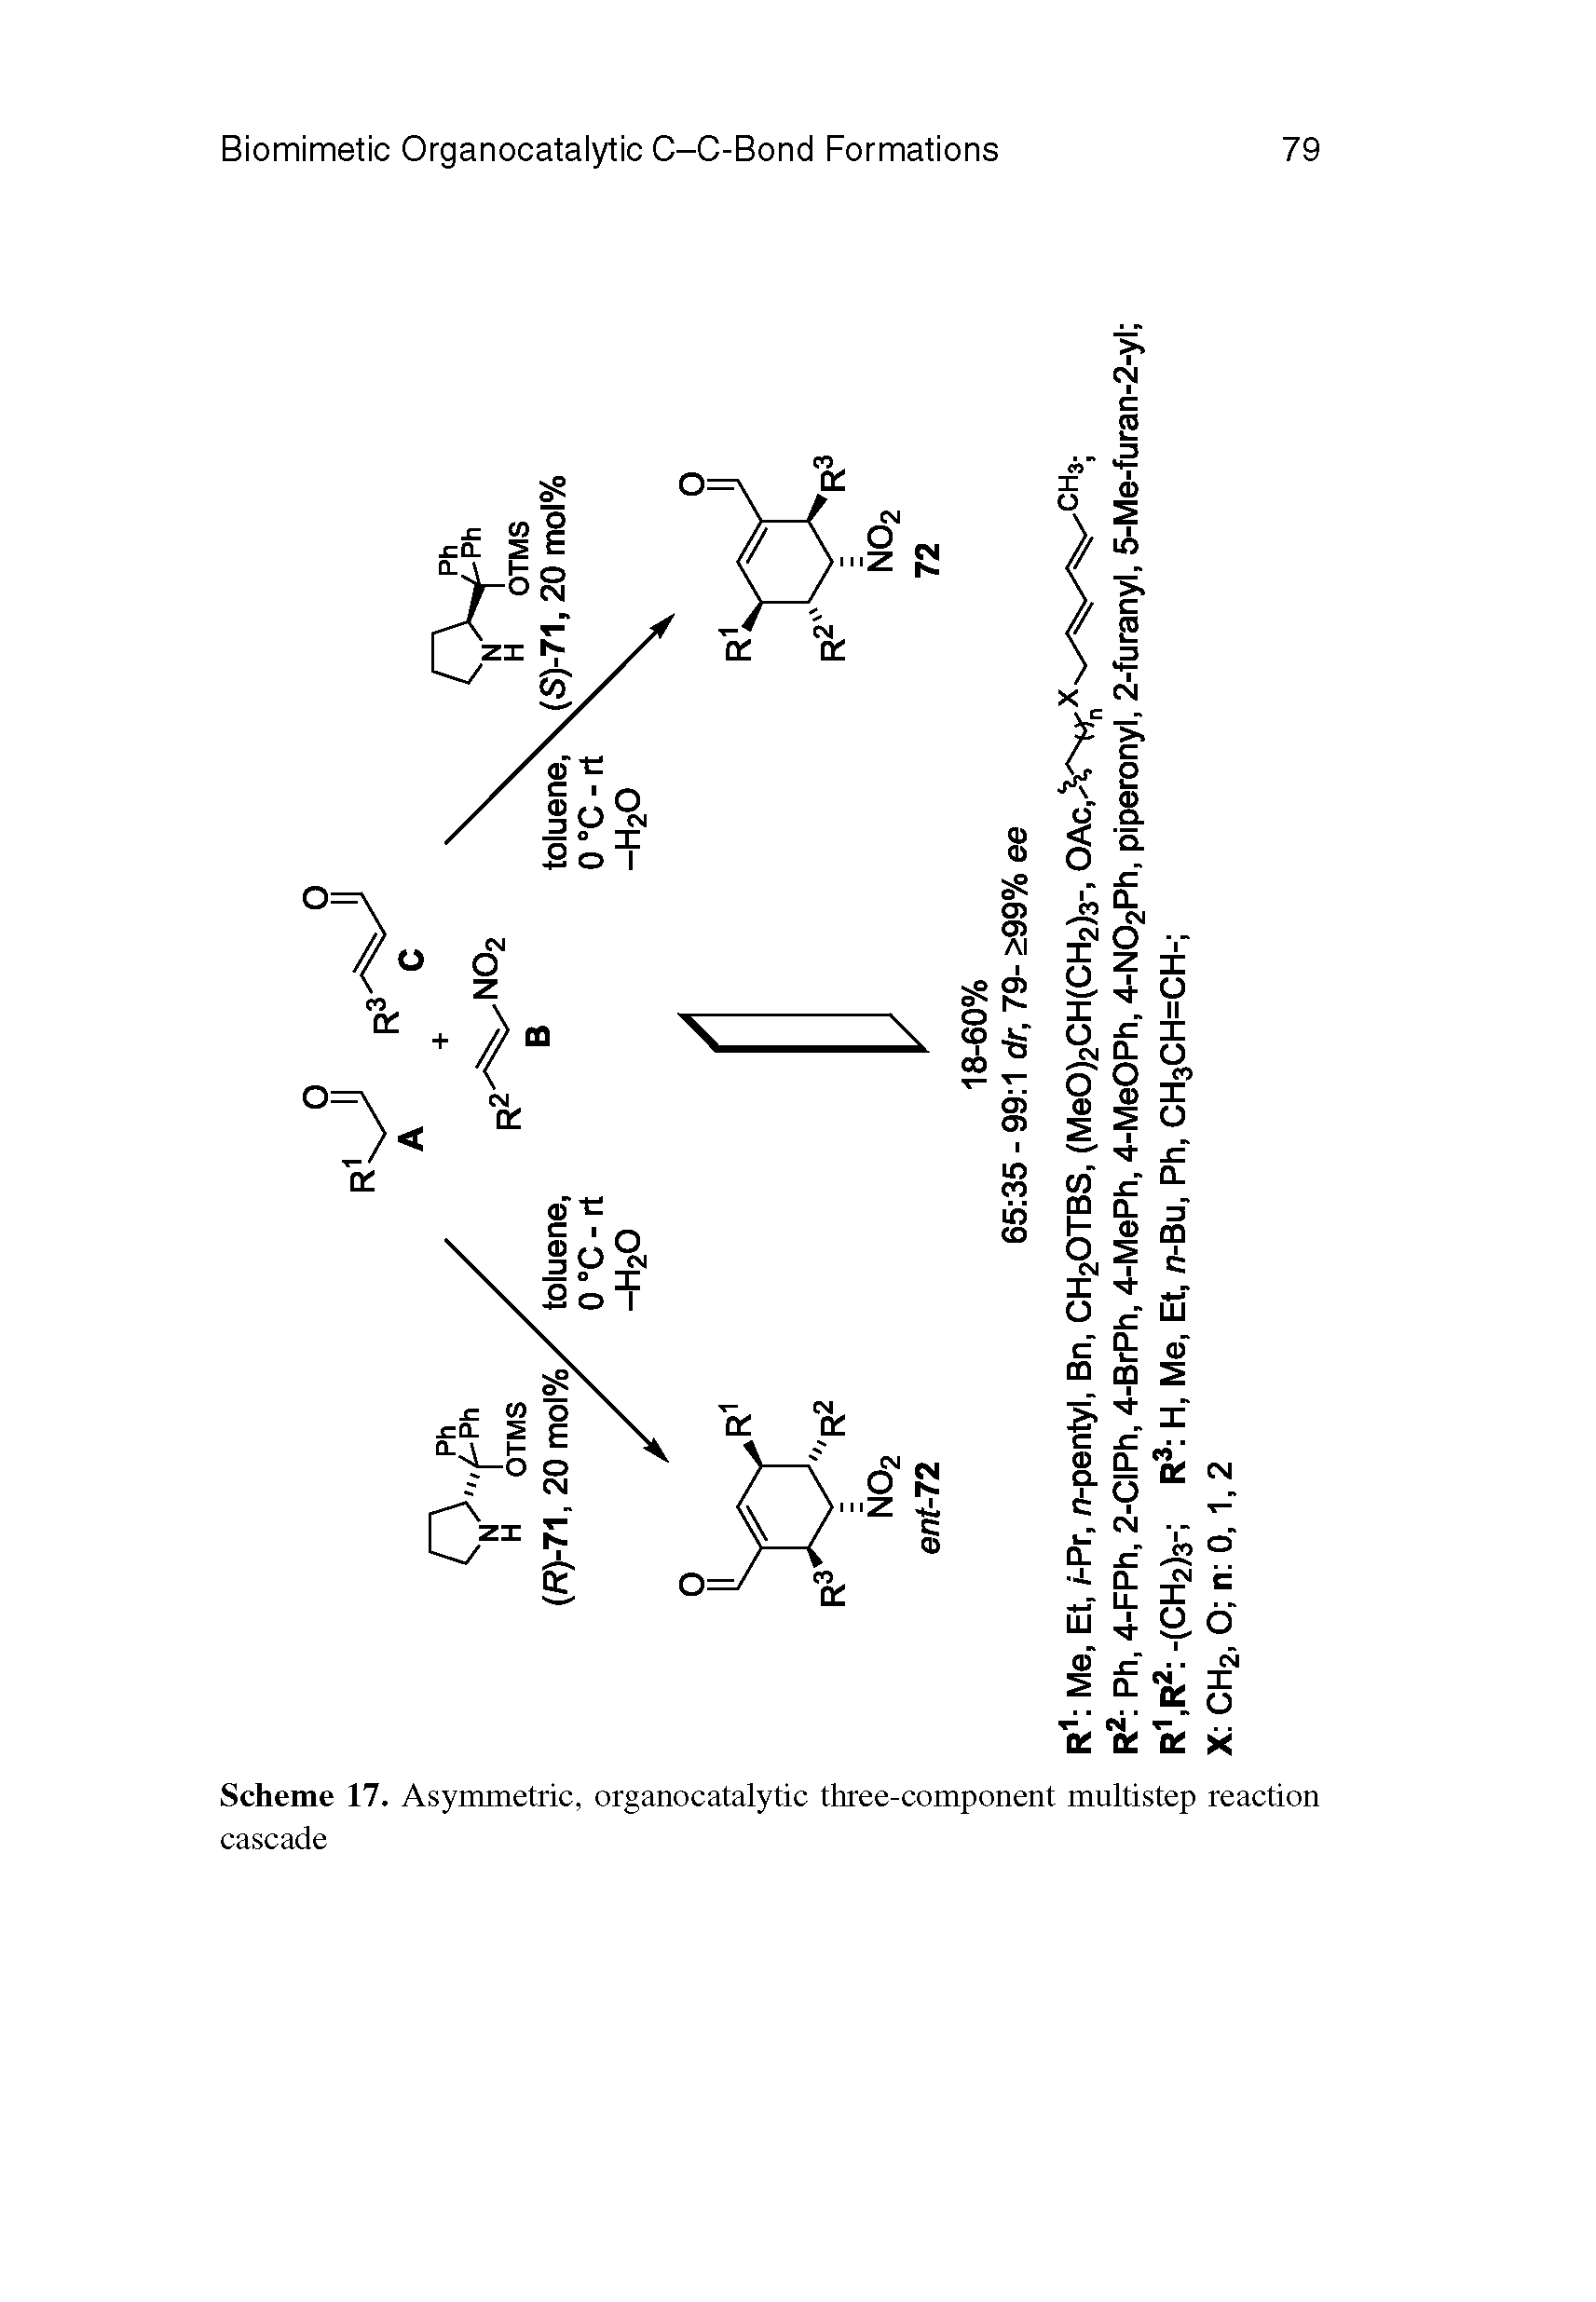 Scheme 17. Asymmetric, organocatalytic three-component multistep reaction cascade...